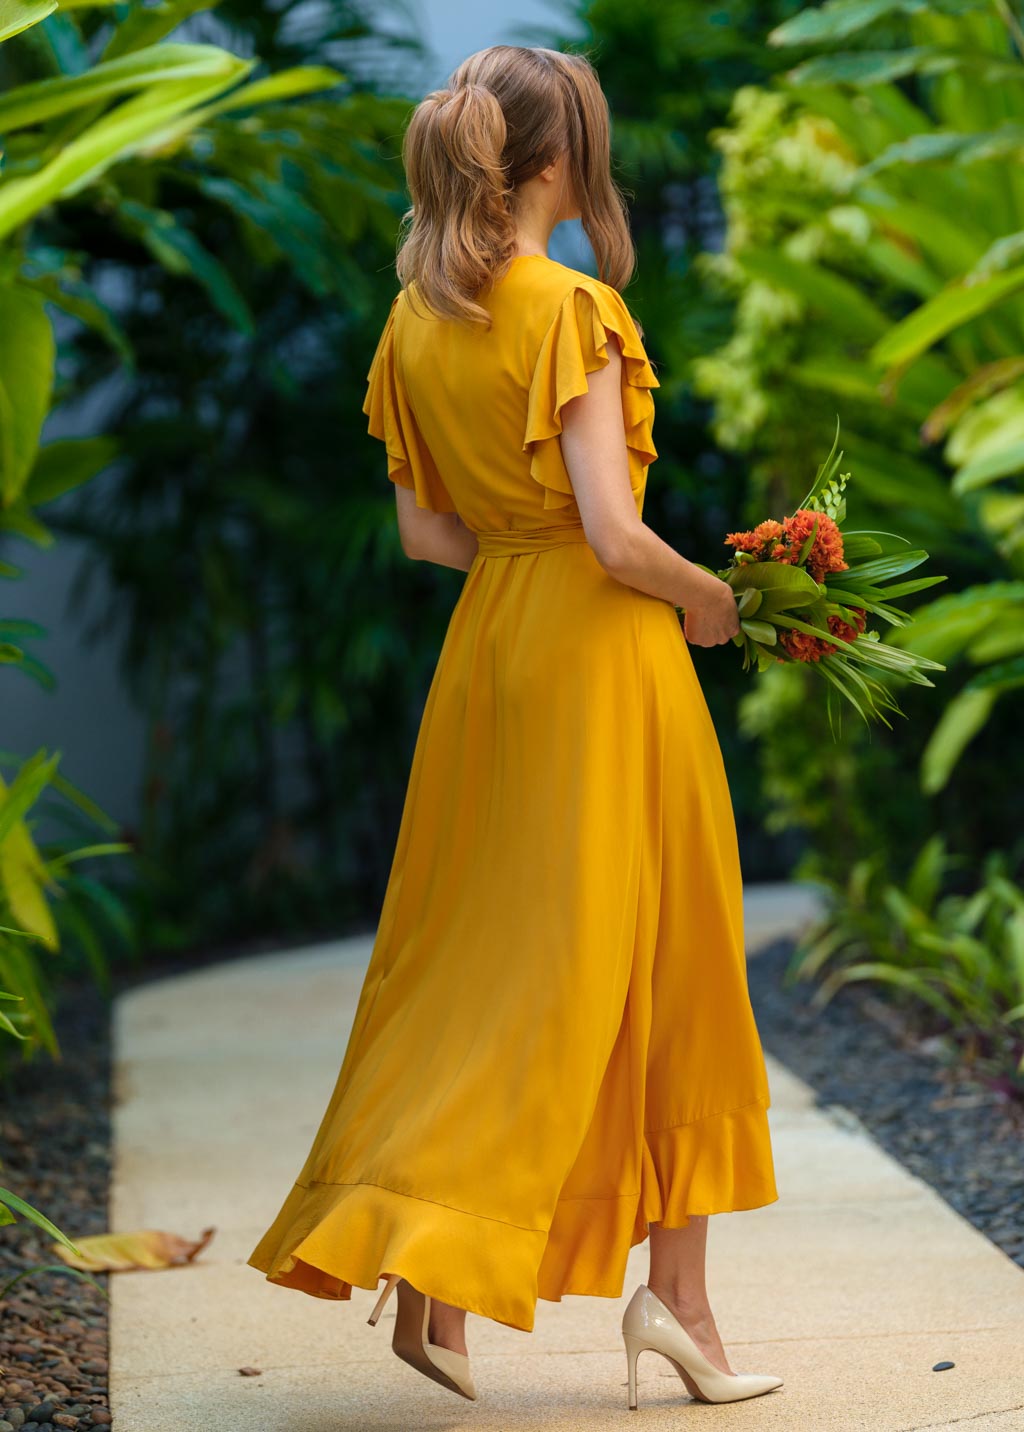 Honey yellow romantic wrap dress